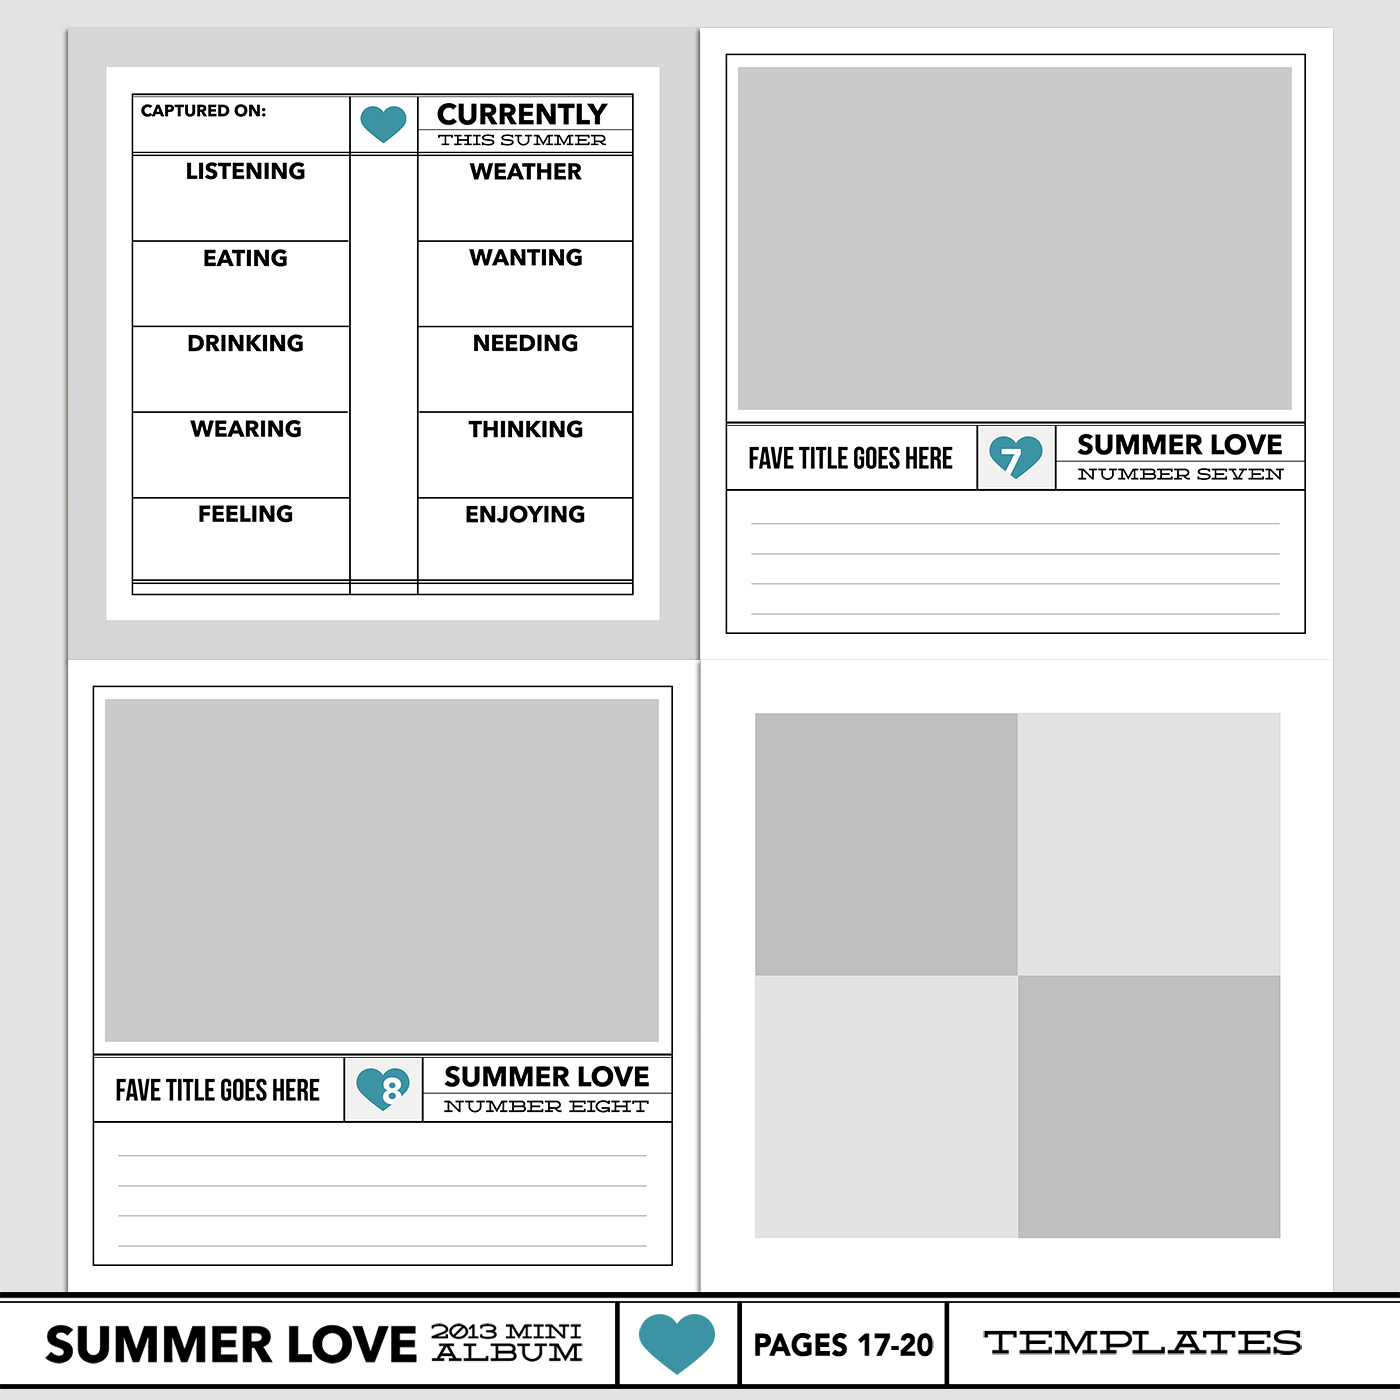 nettiodesigns_SummerLove-pg17-20-templates-1400